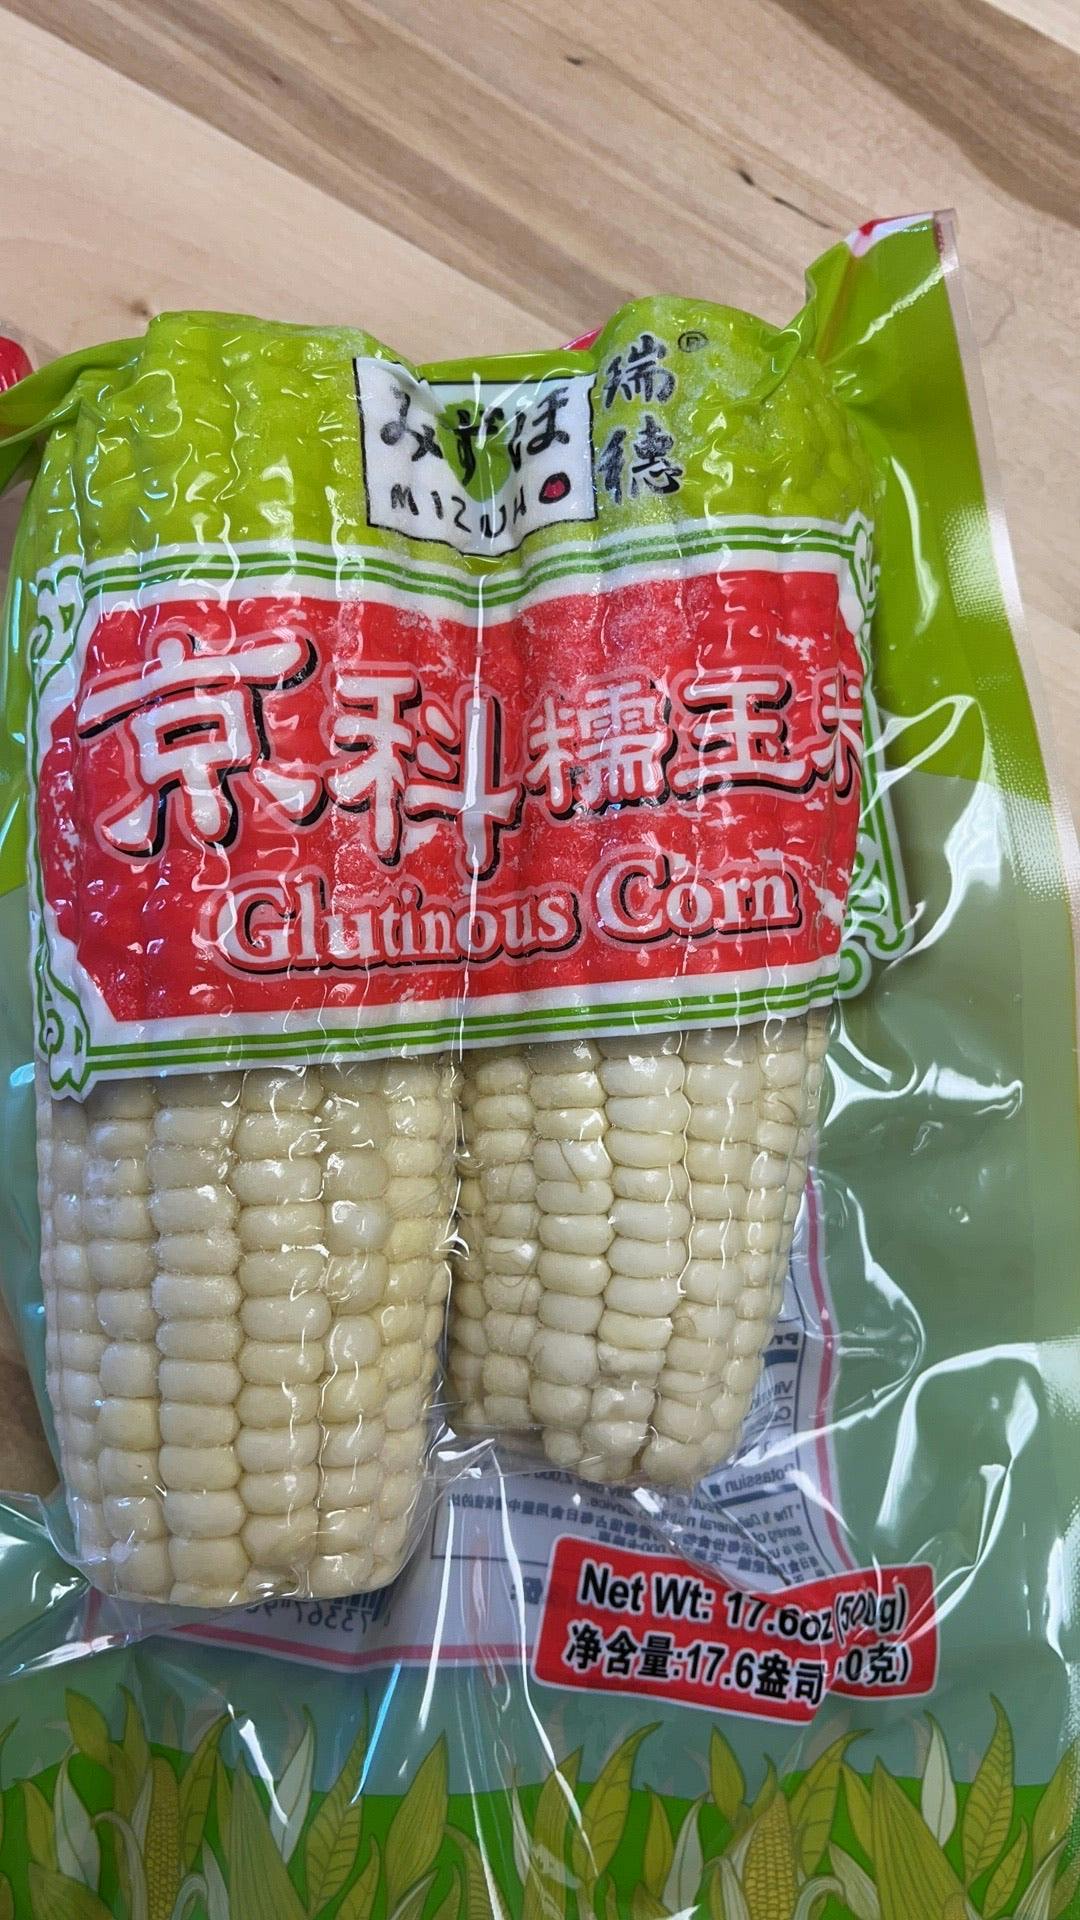 Glutinous Corn